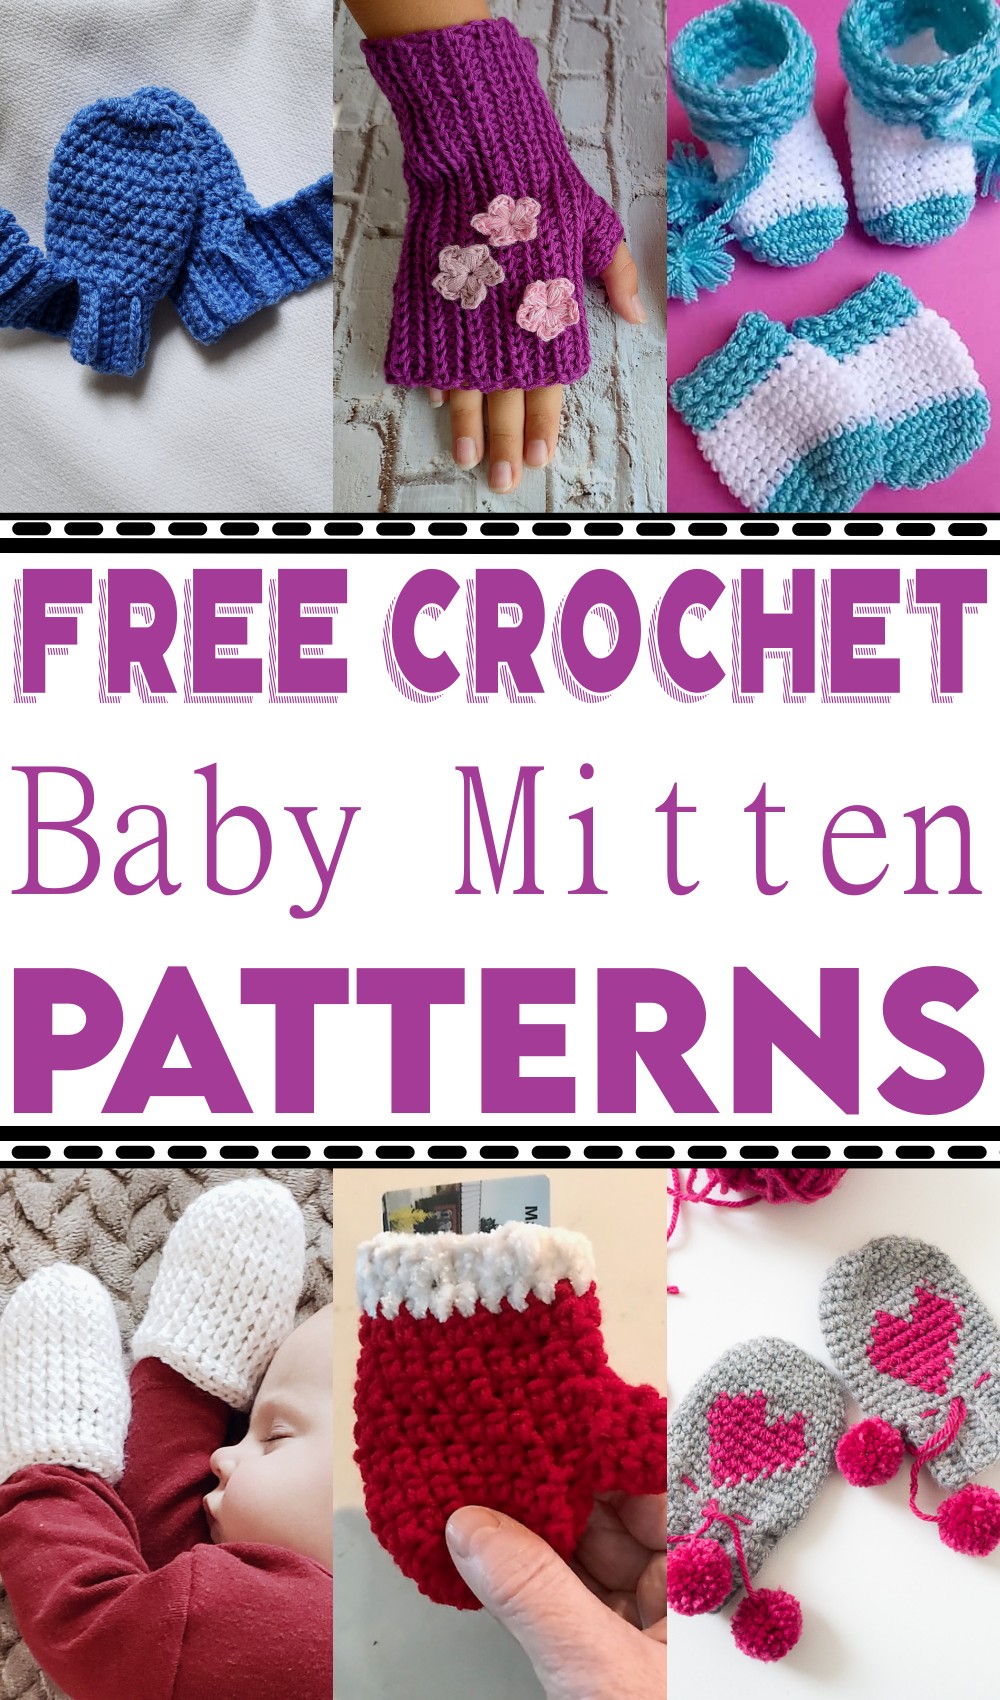 Free Crochet Baby Mitten Patterns